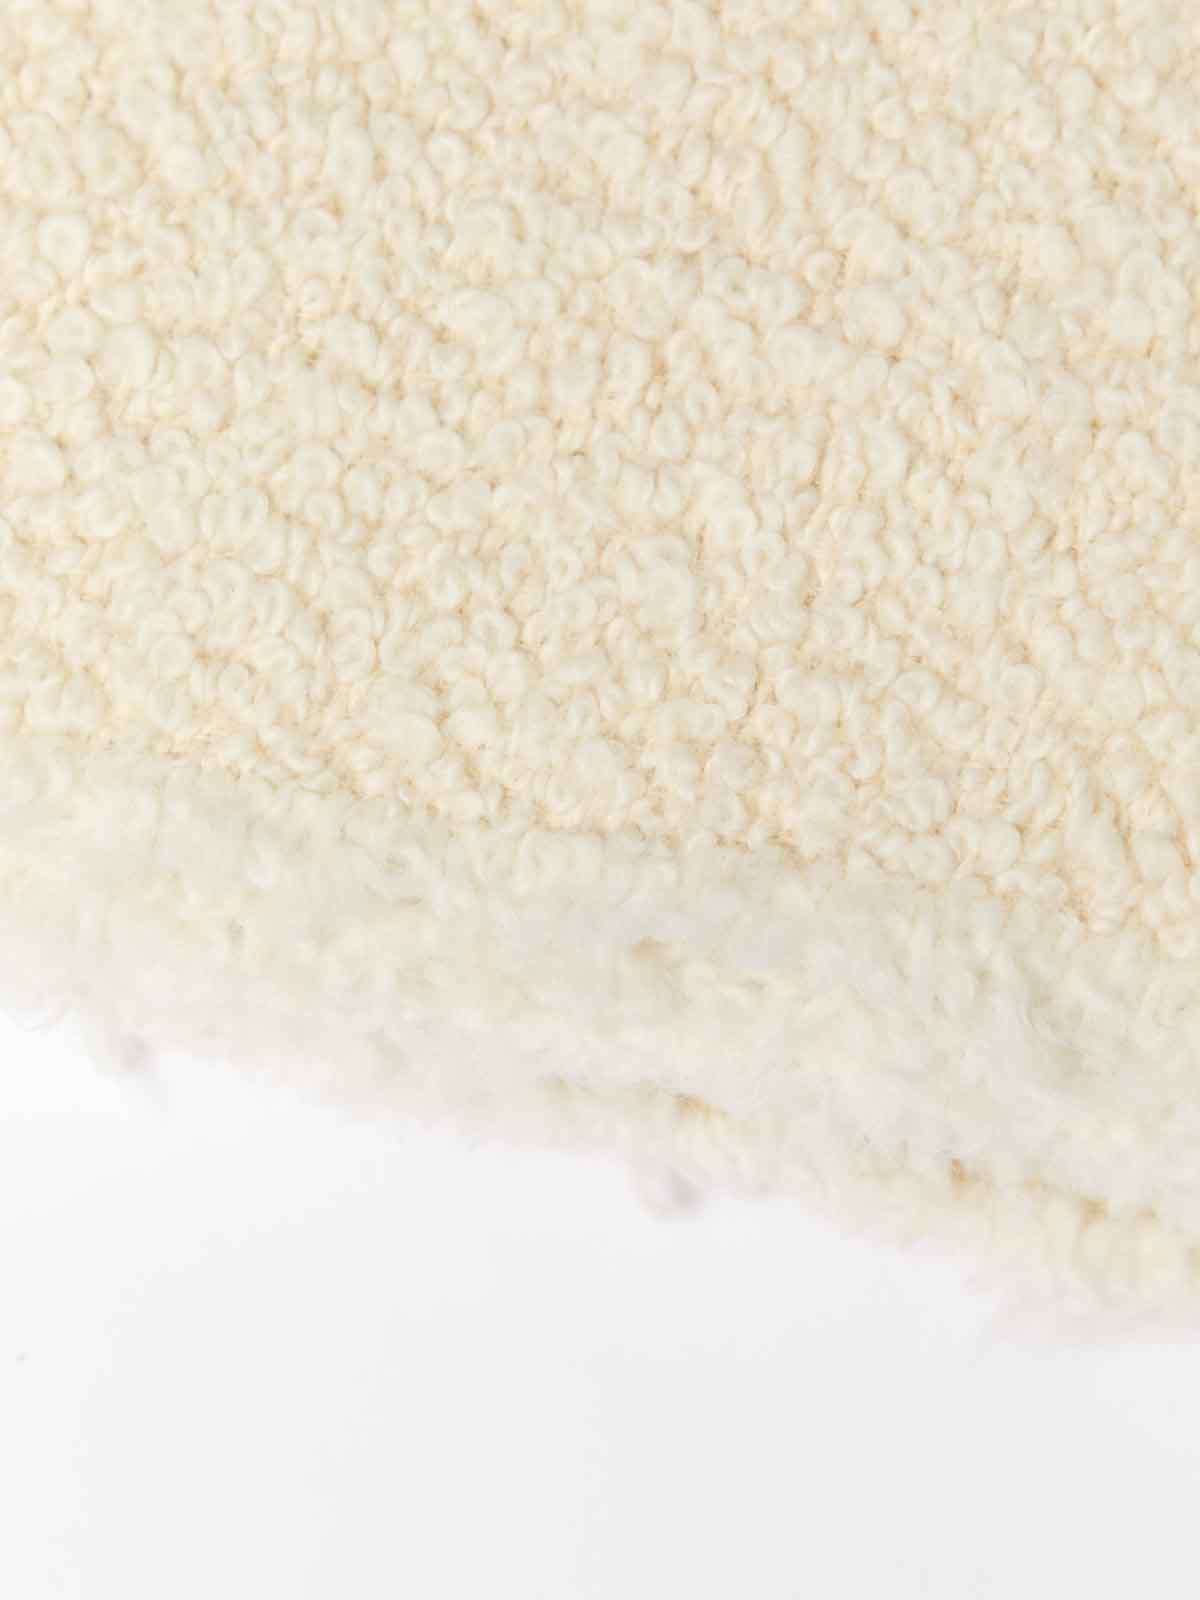 Kurlisuri Blanket in Cream by Uniq'ity on white back ground